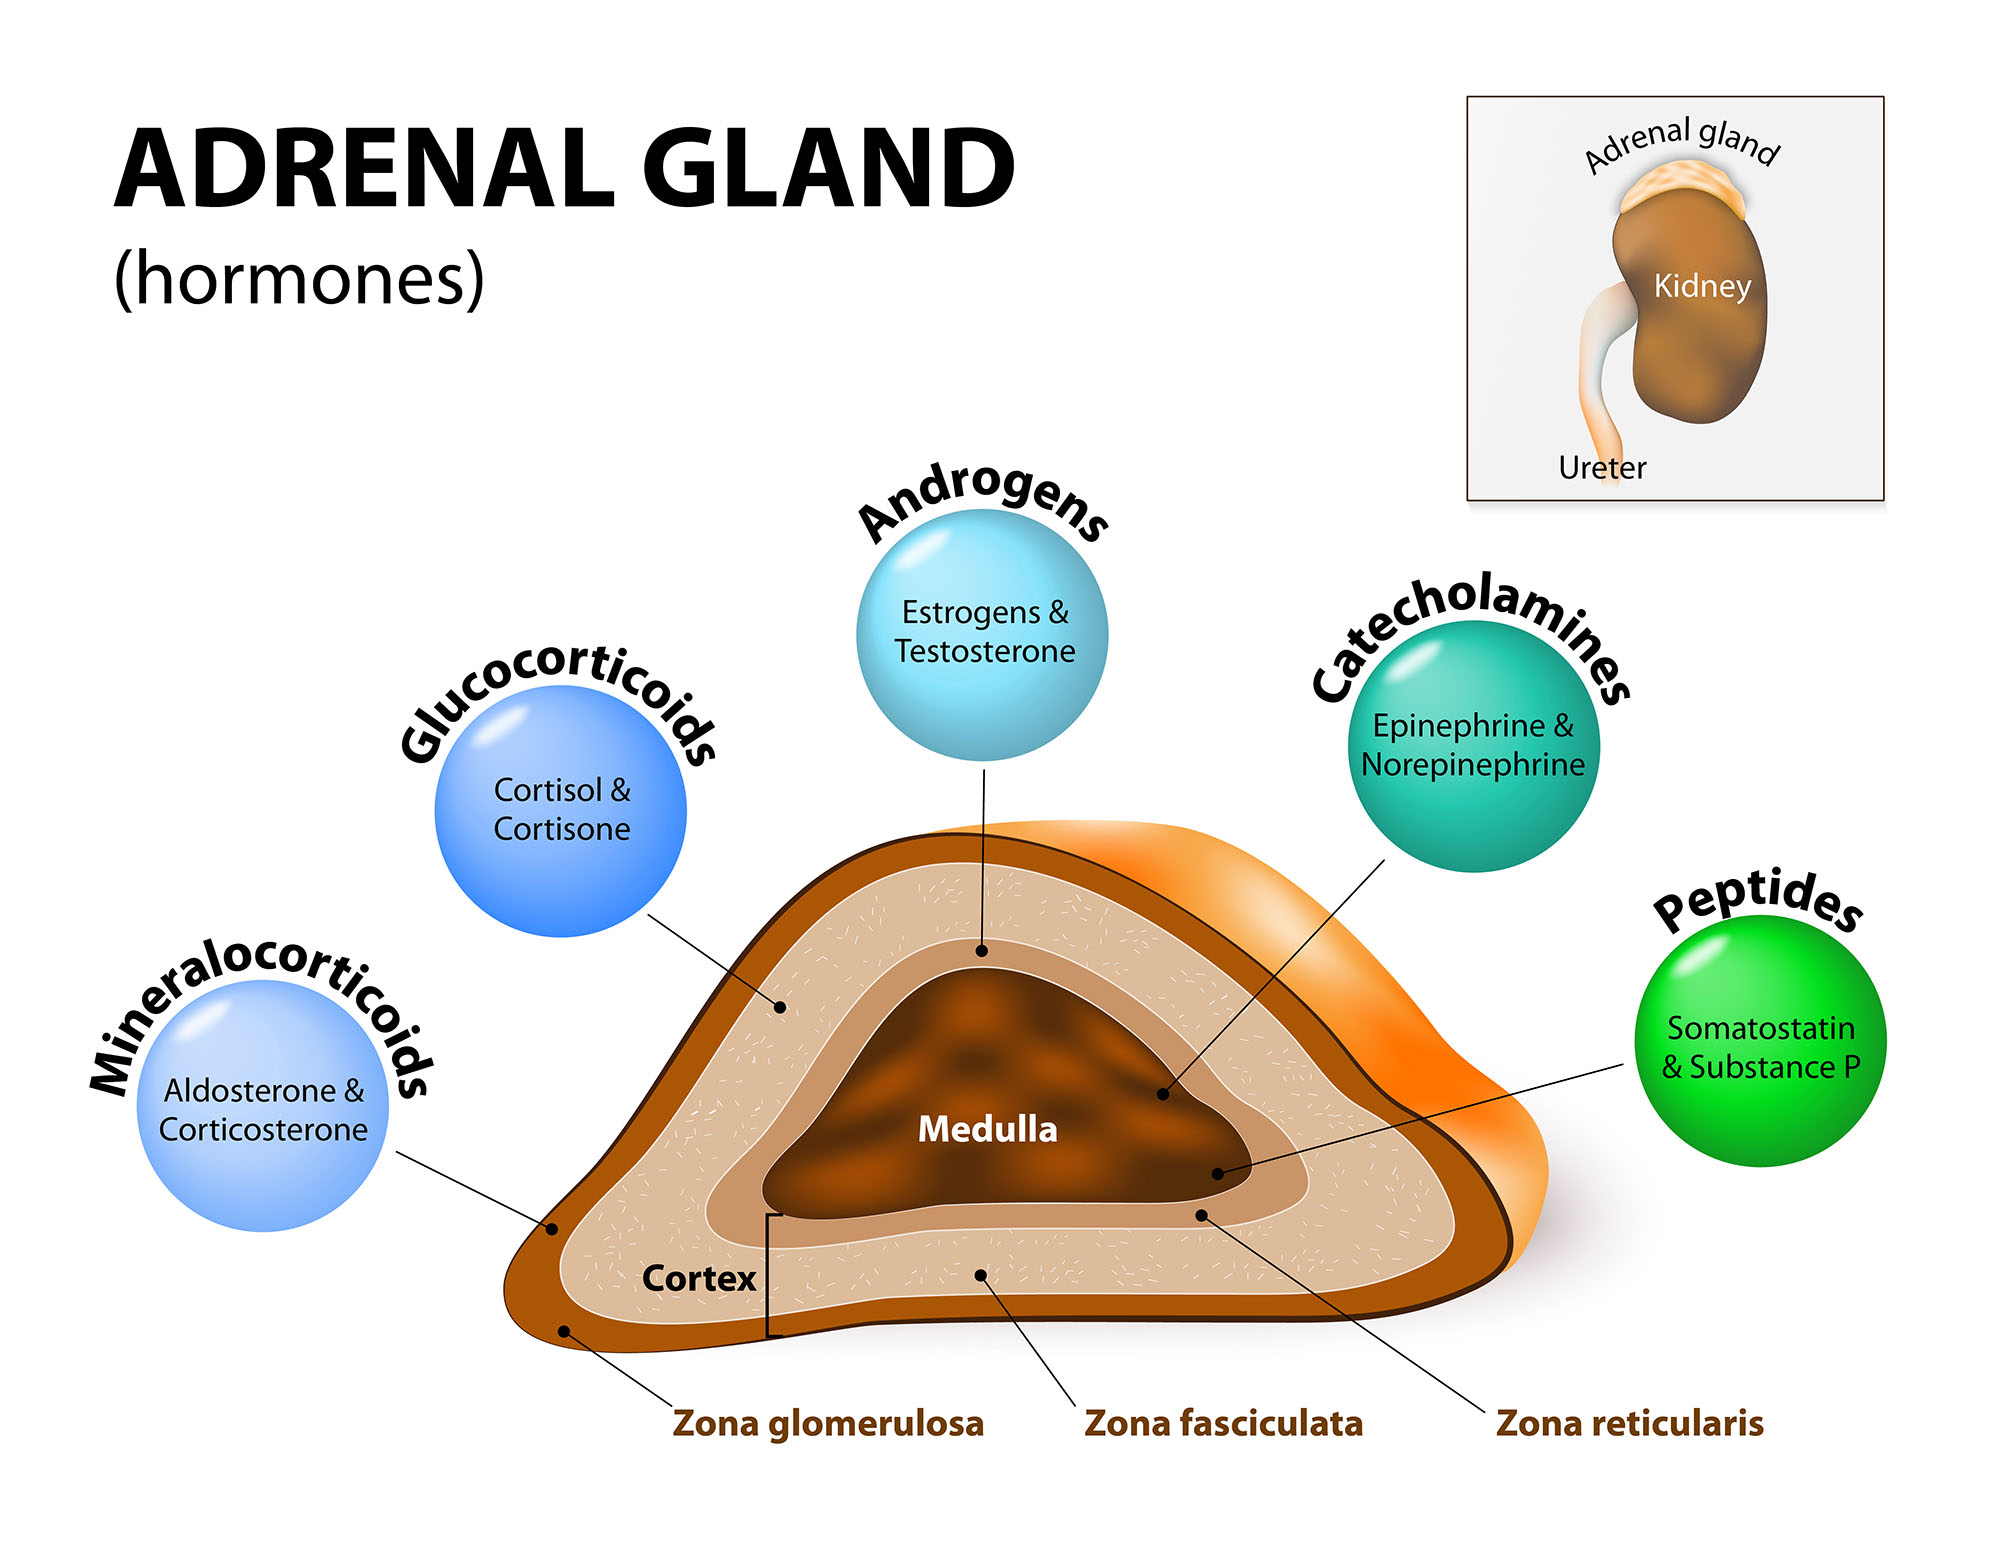 the central core of the adrenal glands secrete the stress hormone